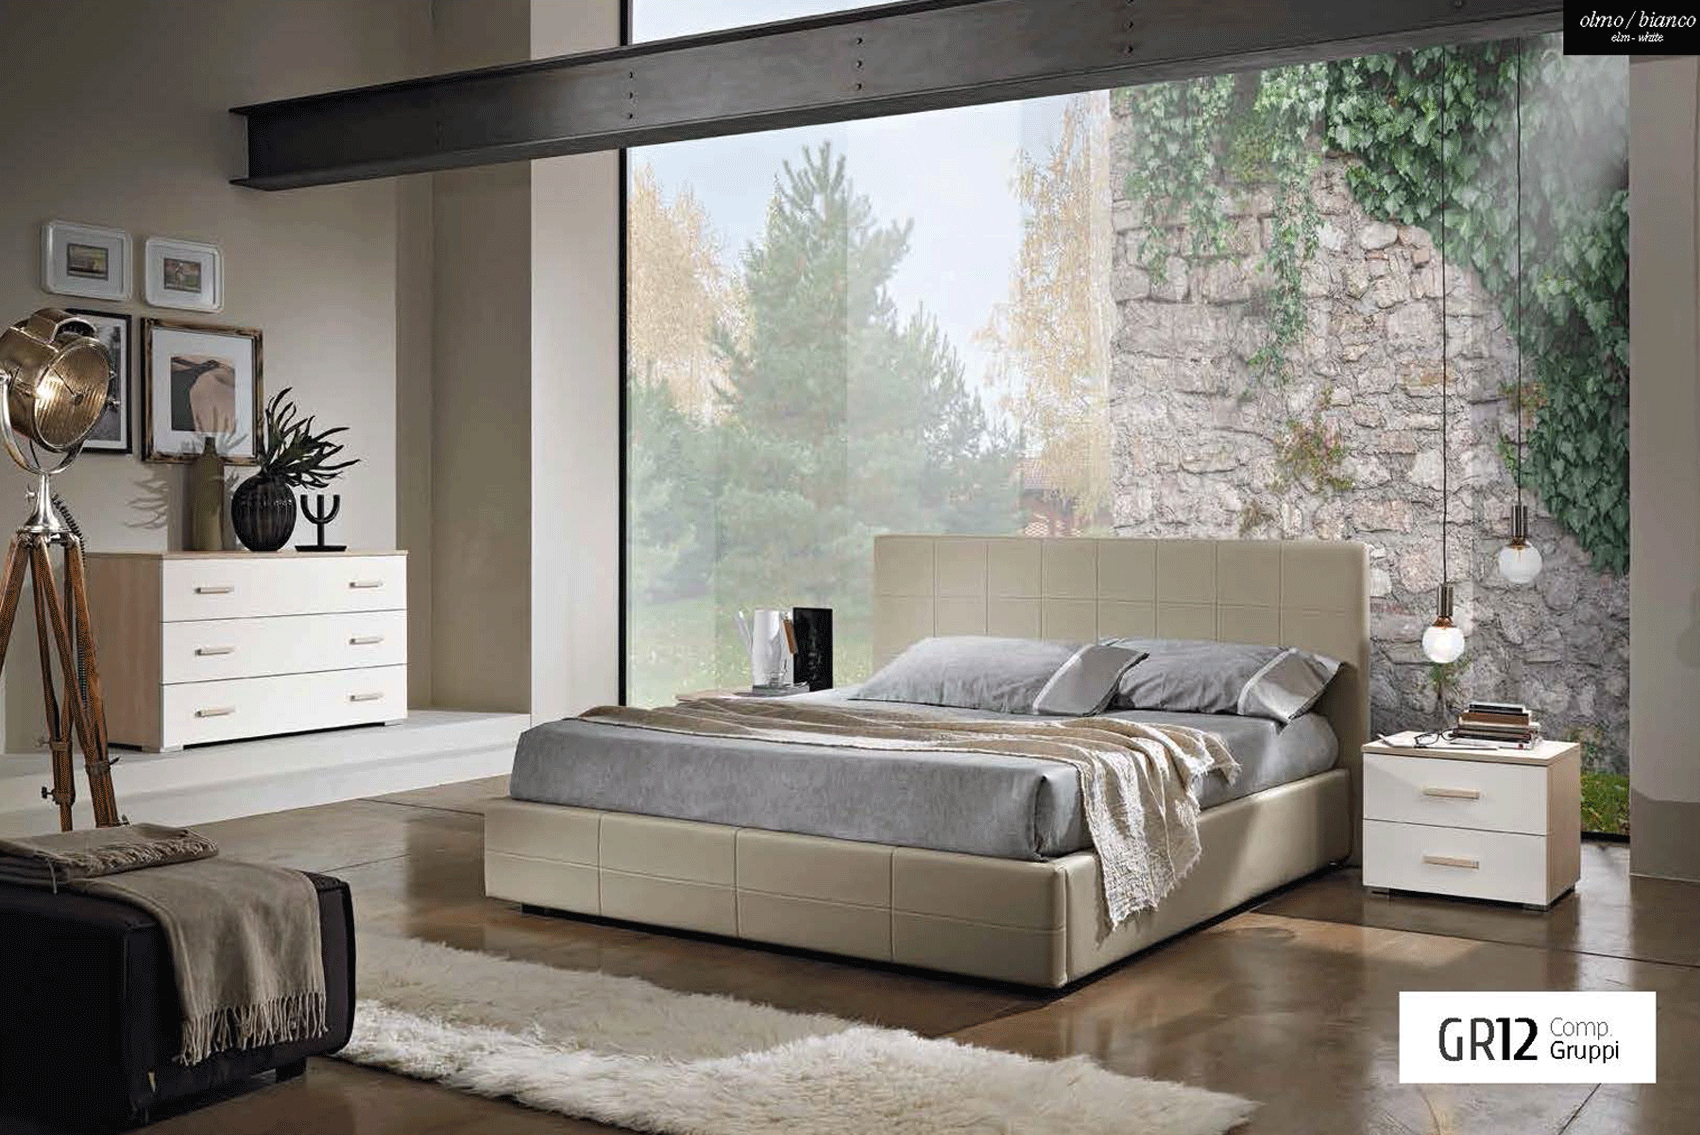 Bedroom Furniture Beds with storage GR12